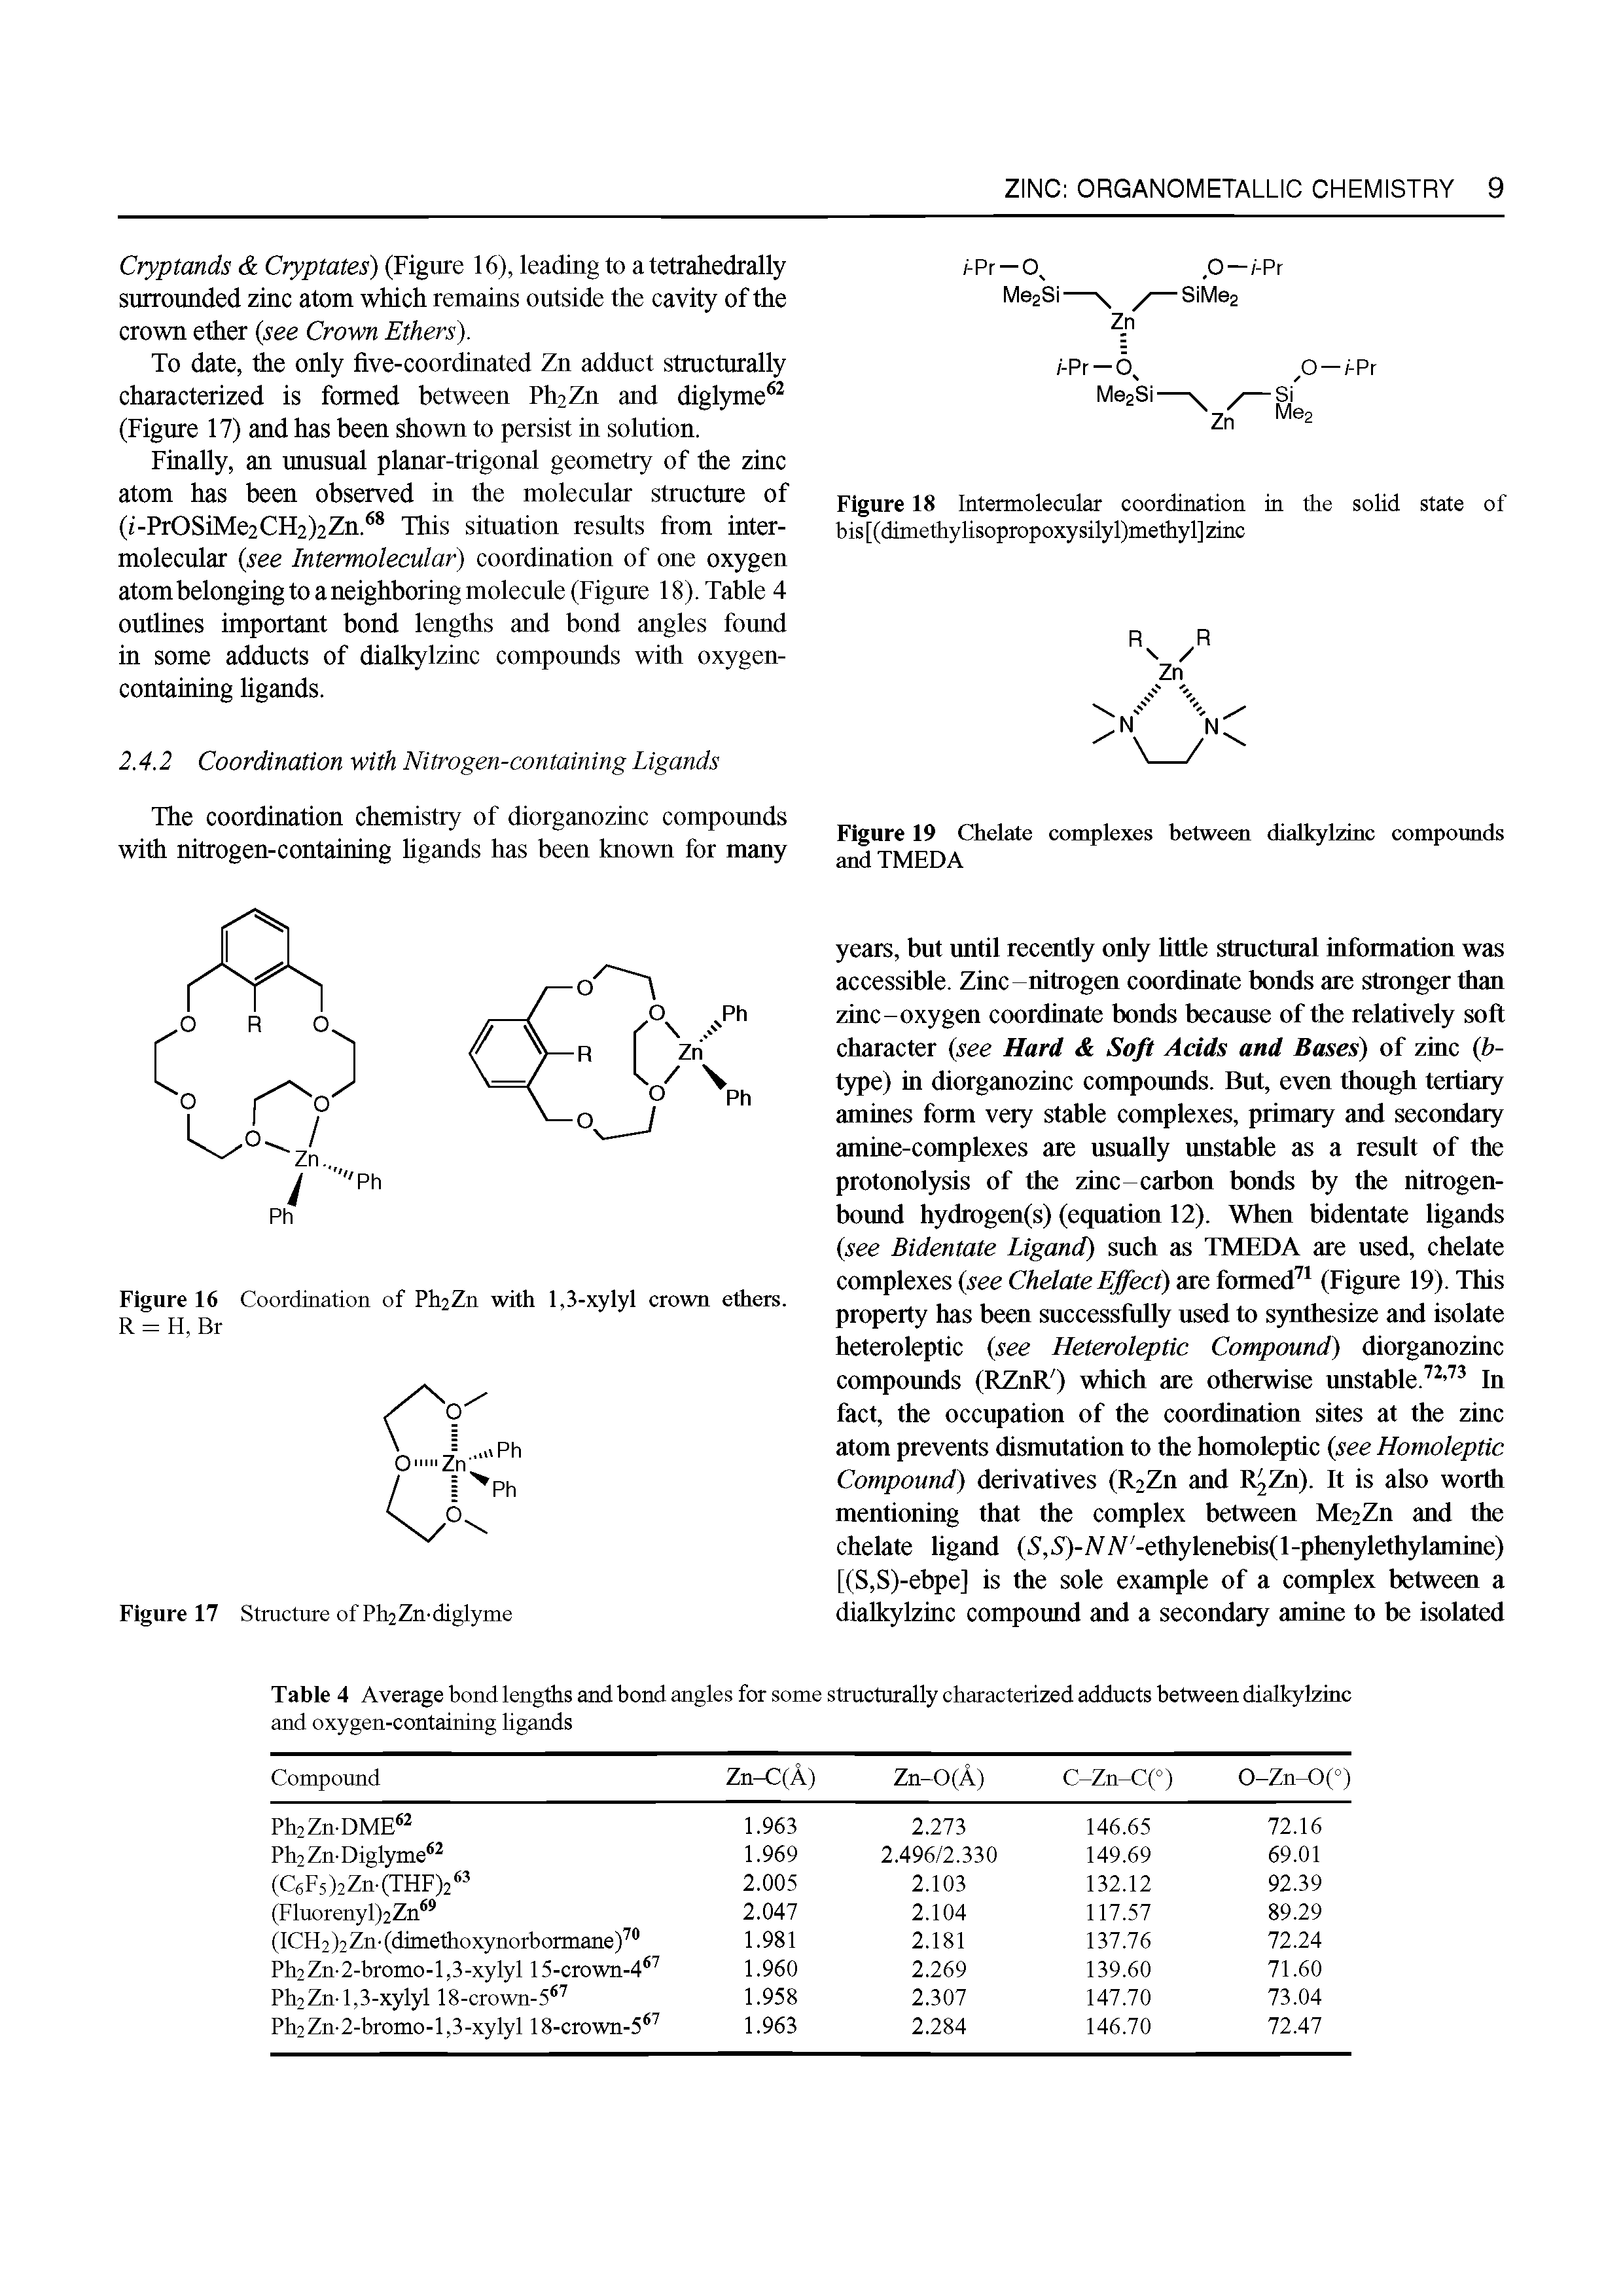 Figure 18 Intermolecular coordination in the solid state bis [(dimethylisopropoxy silyl)methyl] zinc...